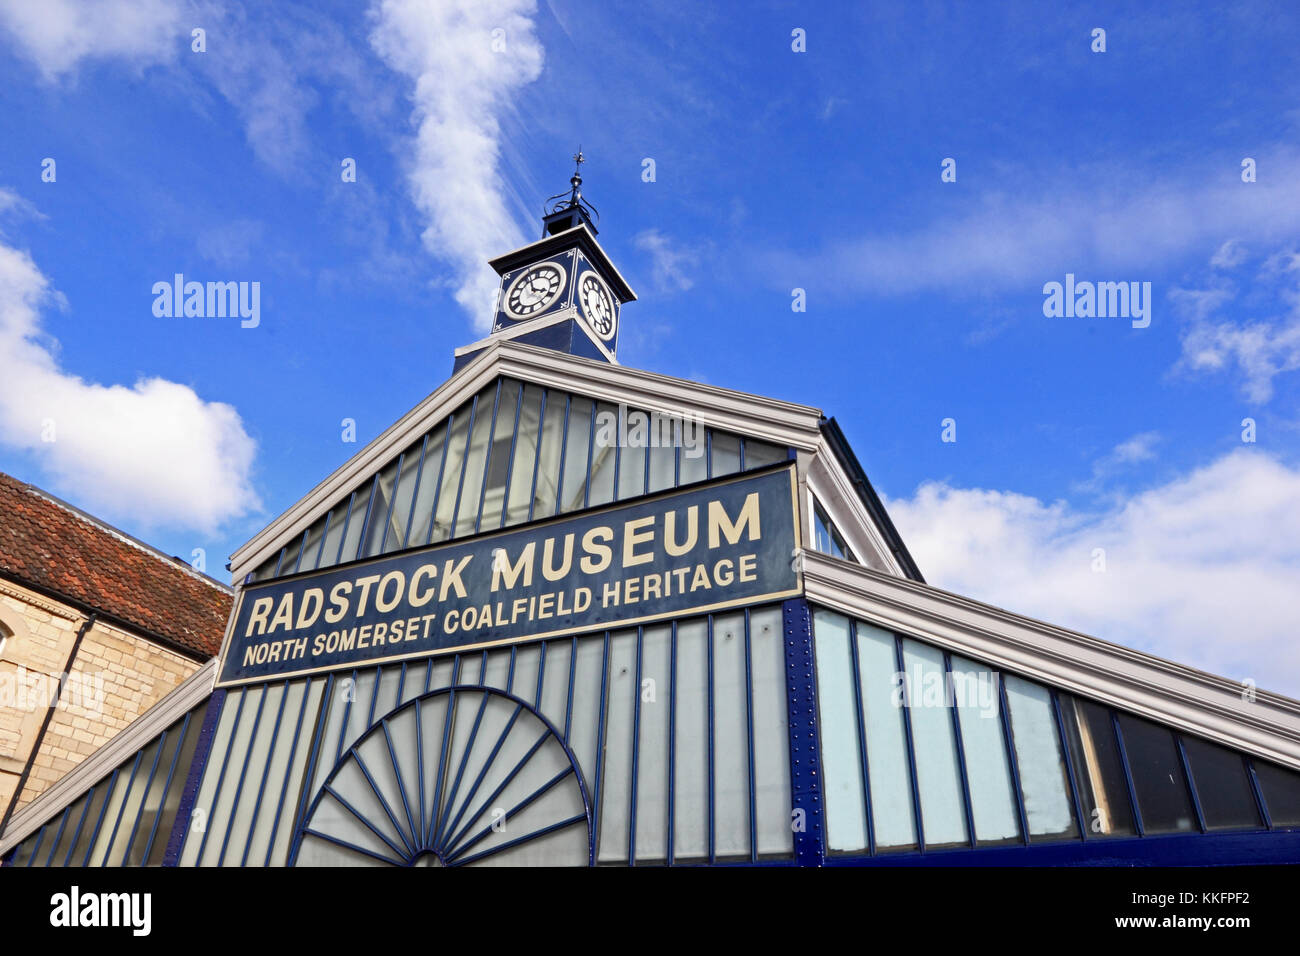 Radstock Museum, North Somerset Coalfield Heritage Stock Photo